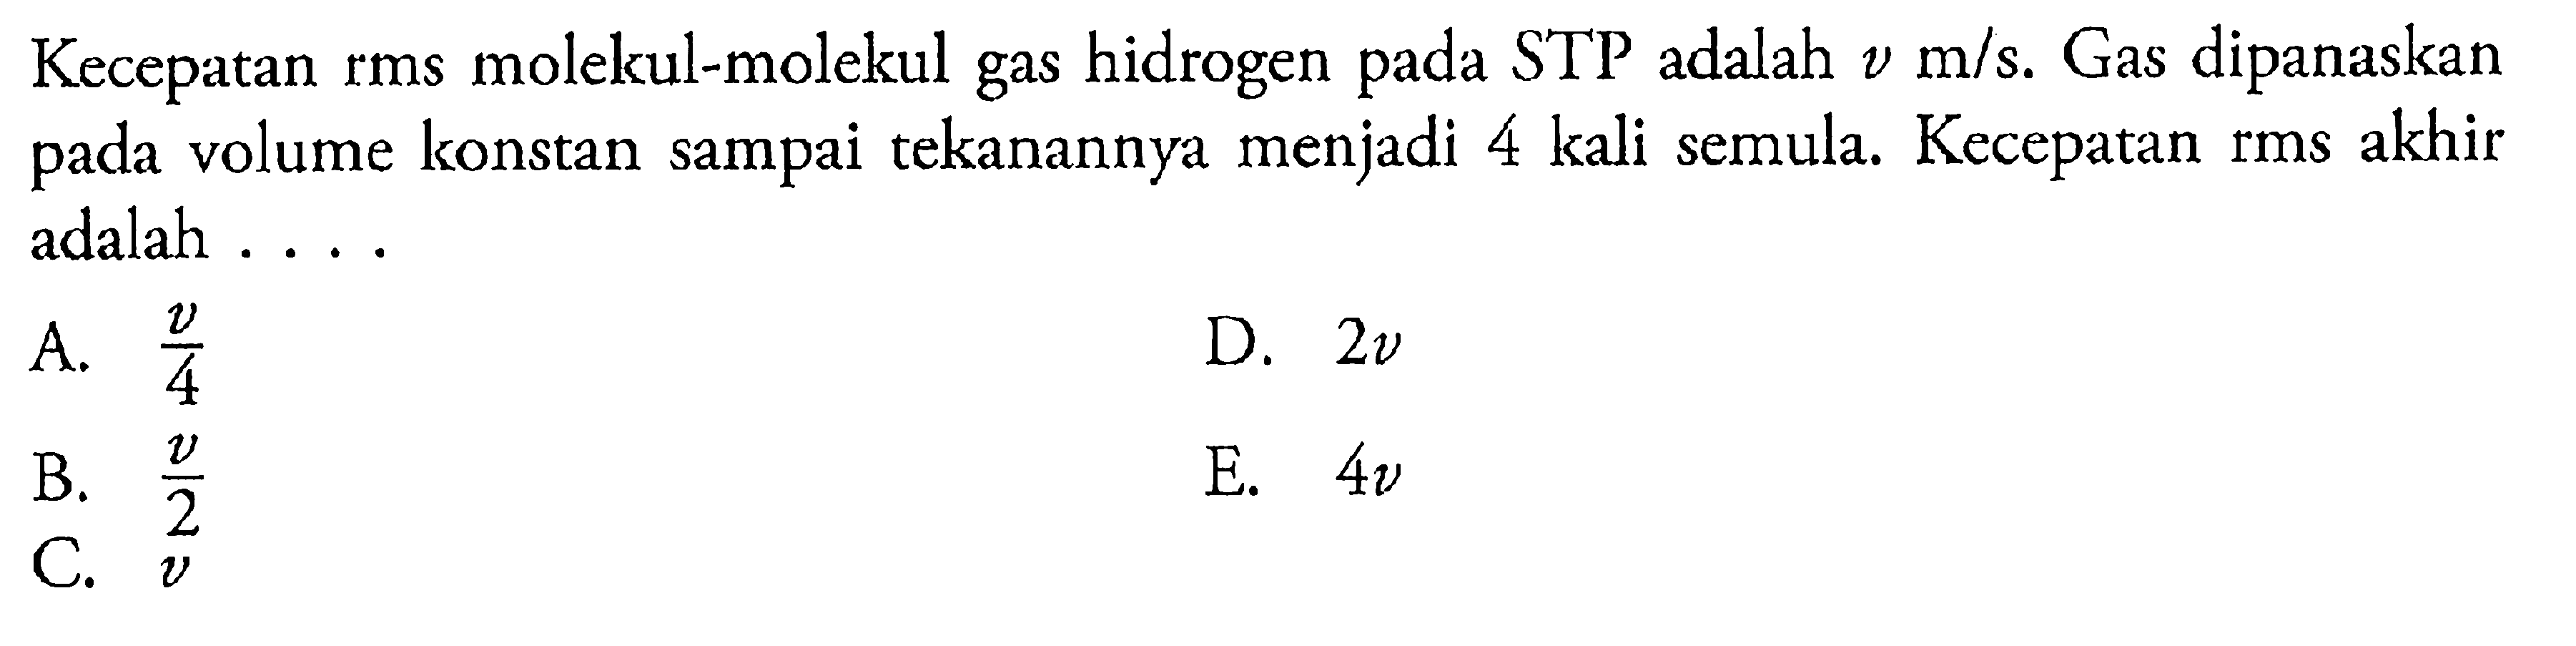 Kecepatan rms molekul-molekul gas hidrogen pada STP adalah v m/s. Gas dipanaskan pada volume konstan sampai tekanannya menjadi 4 kali semula Kecepatan rms akhir adalah